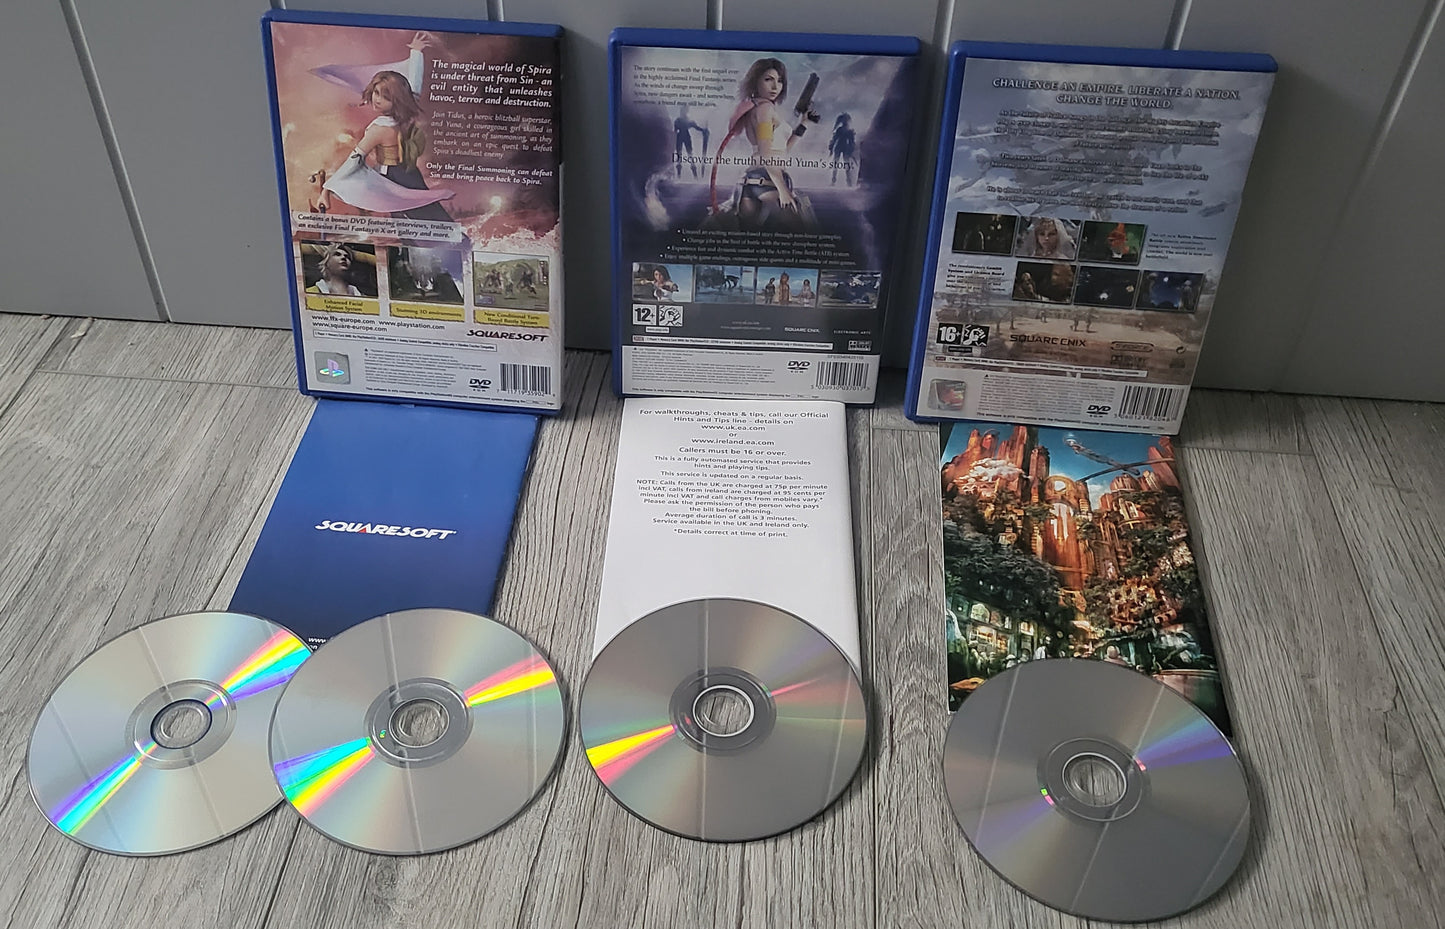 Final Fantasy: X, XII & X-2 Sony PlayStation 2 (PS2) Game Bundle